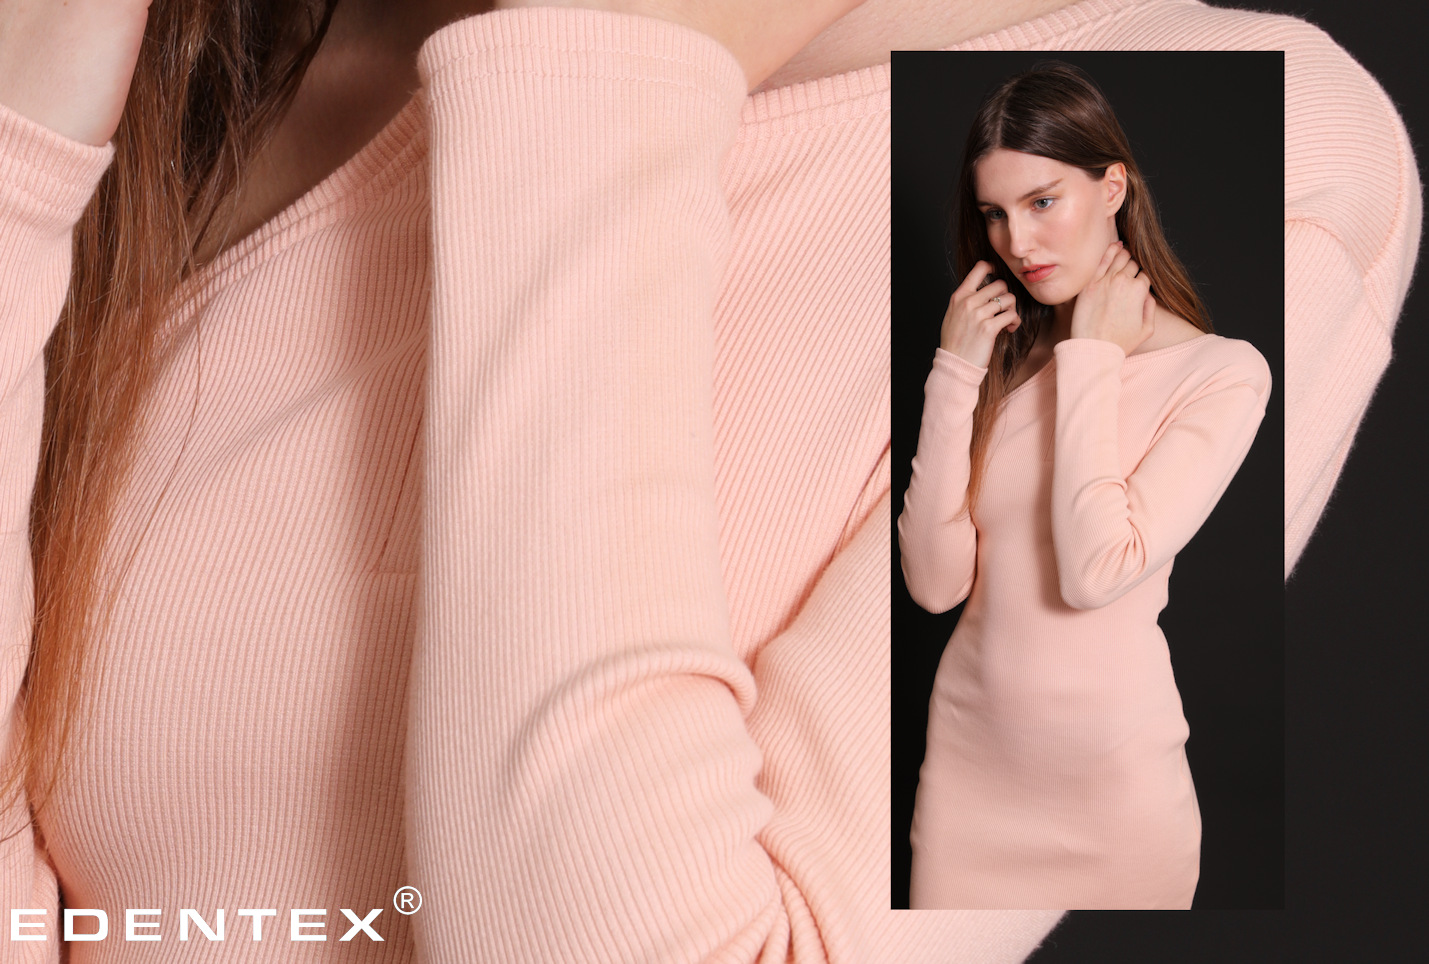 Natural EDENTEX® cotton jersey fabrics are making a fashion revolution